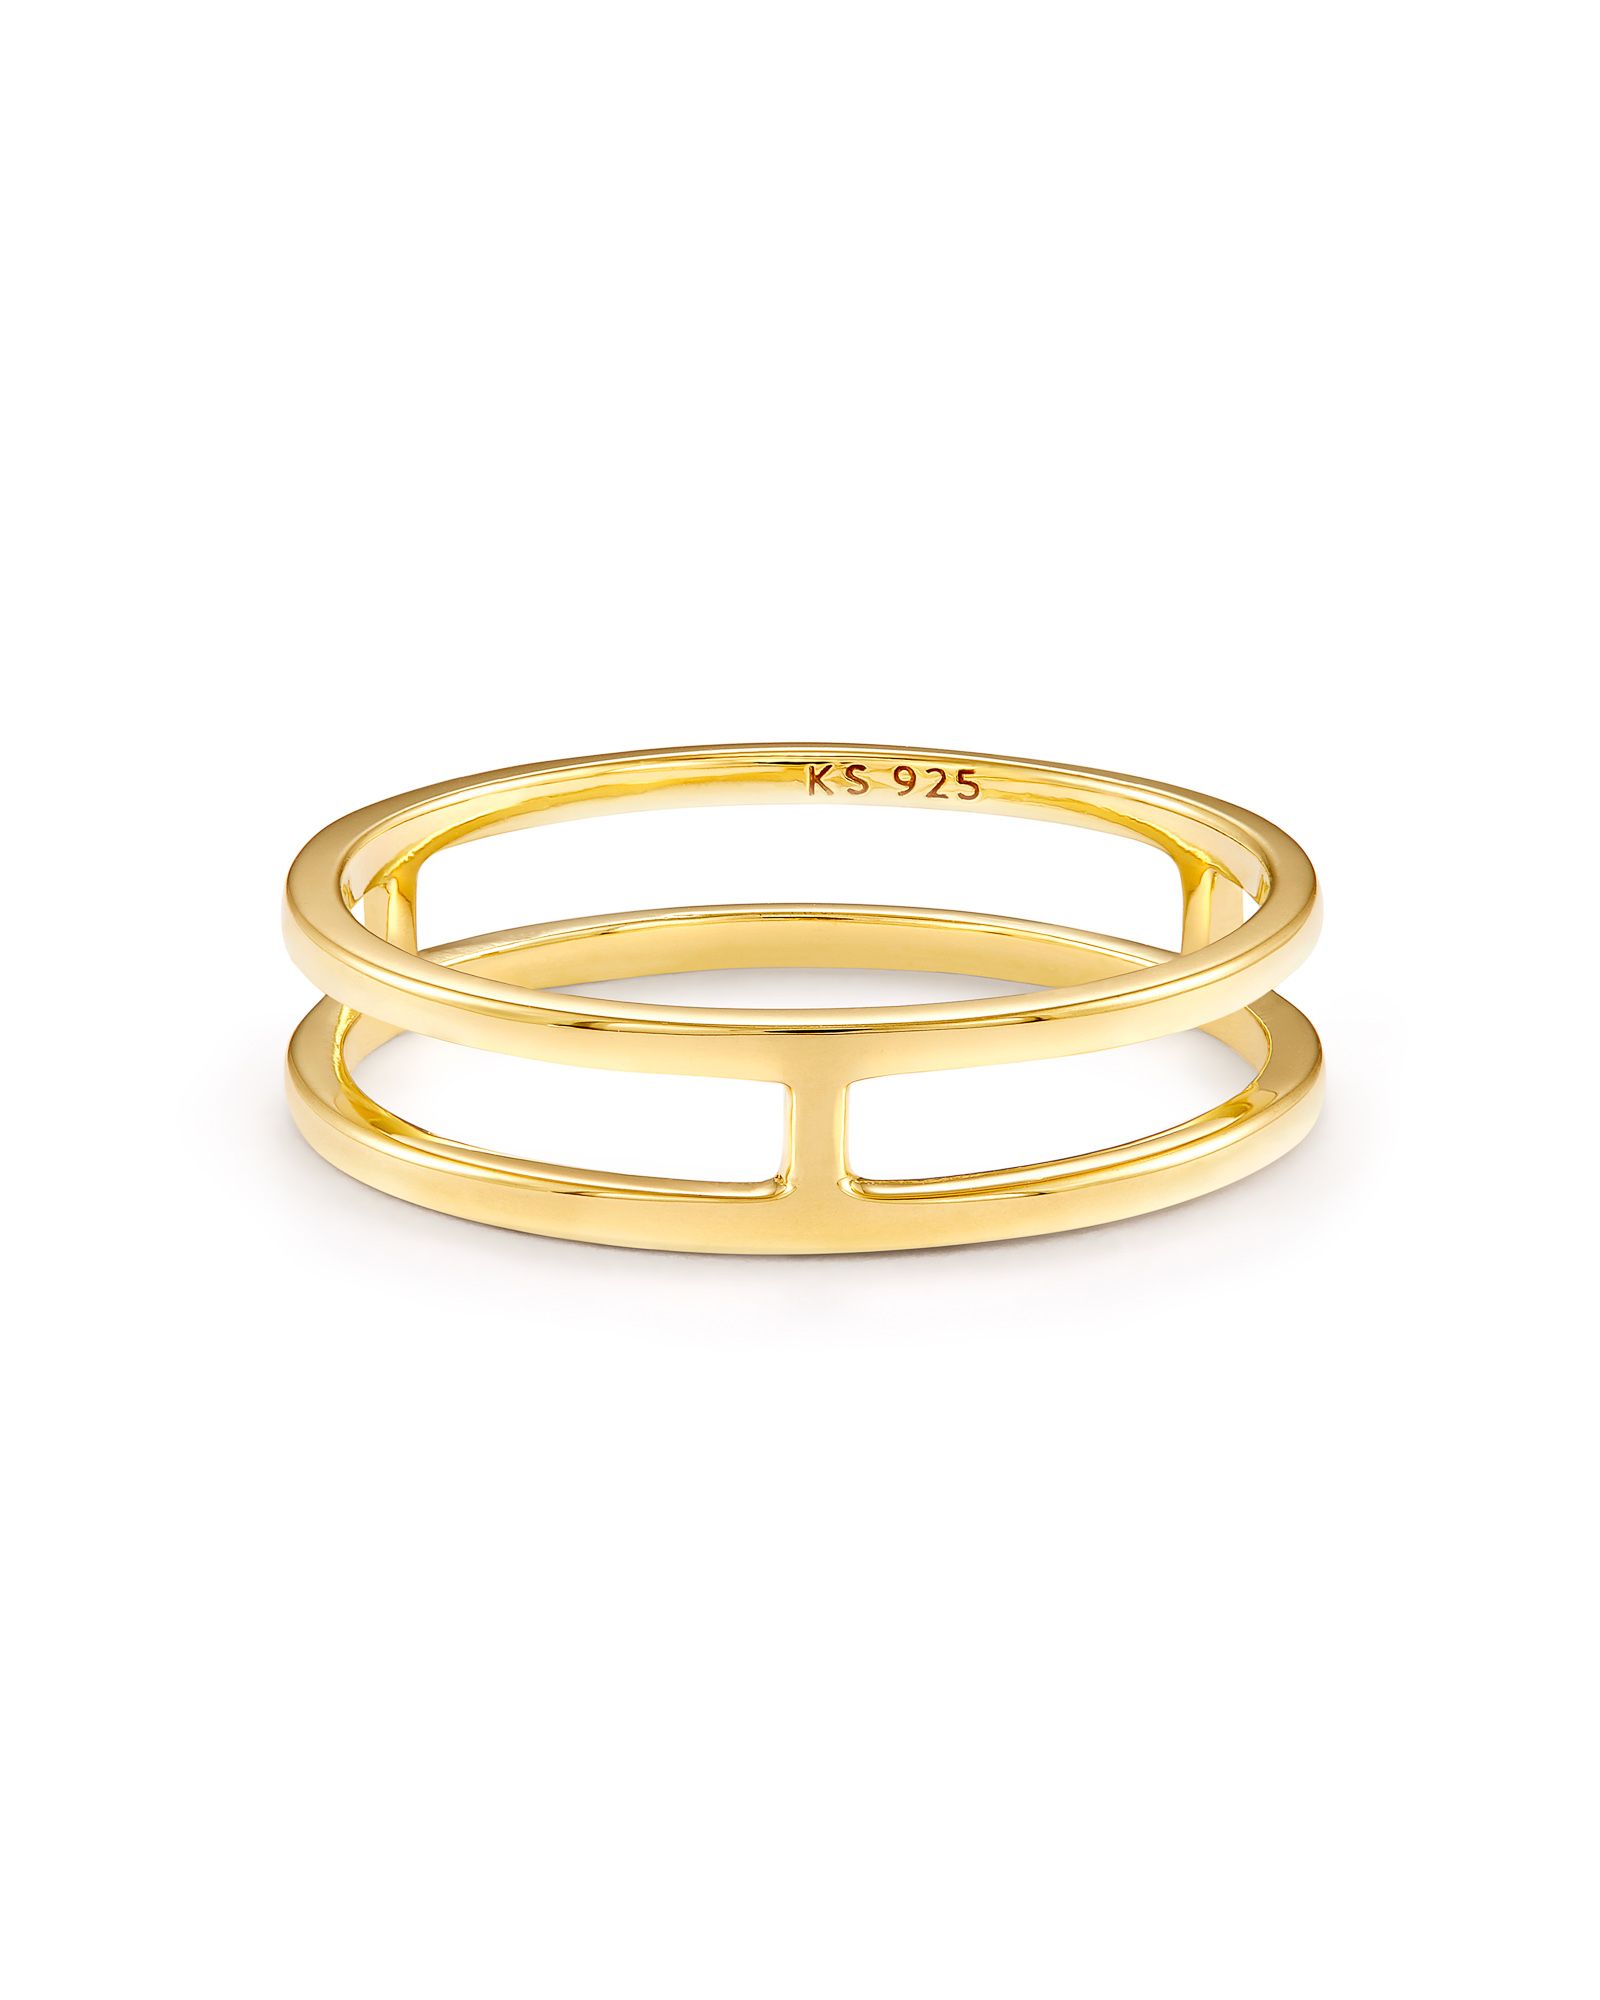 Bennett Double Band Ring in 18k Yellow Gold Vermeil | Kendra Scott